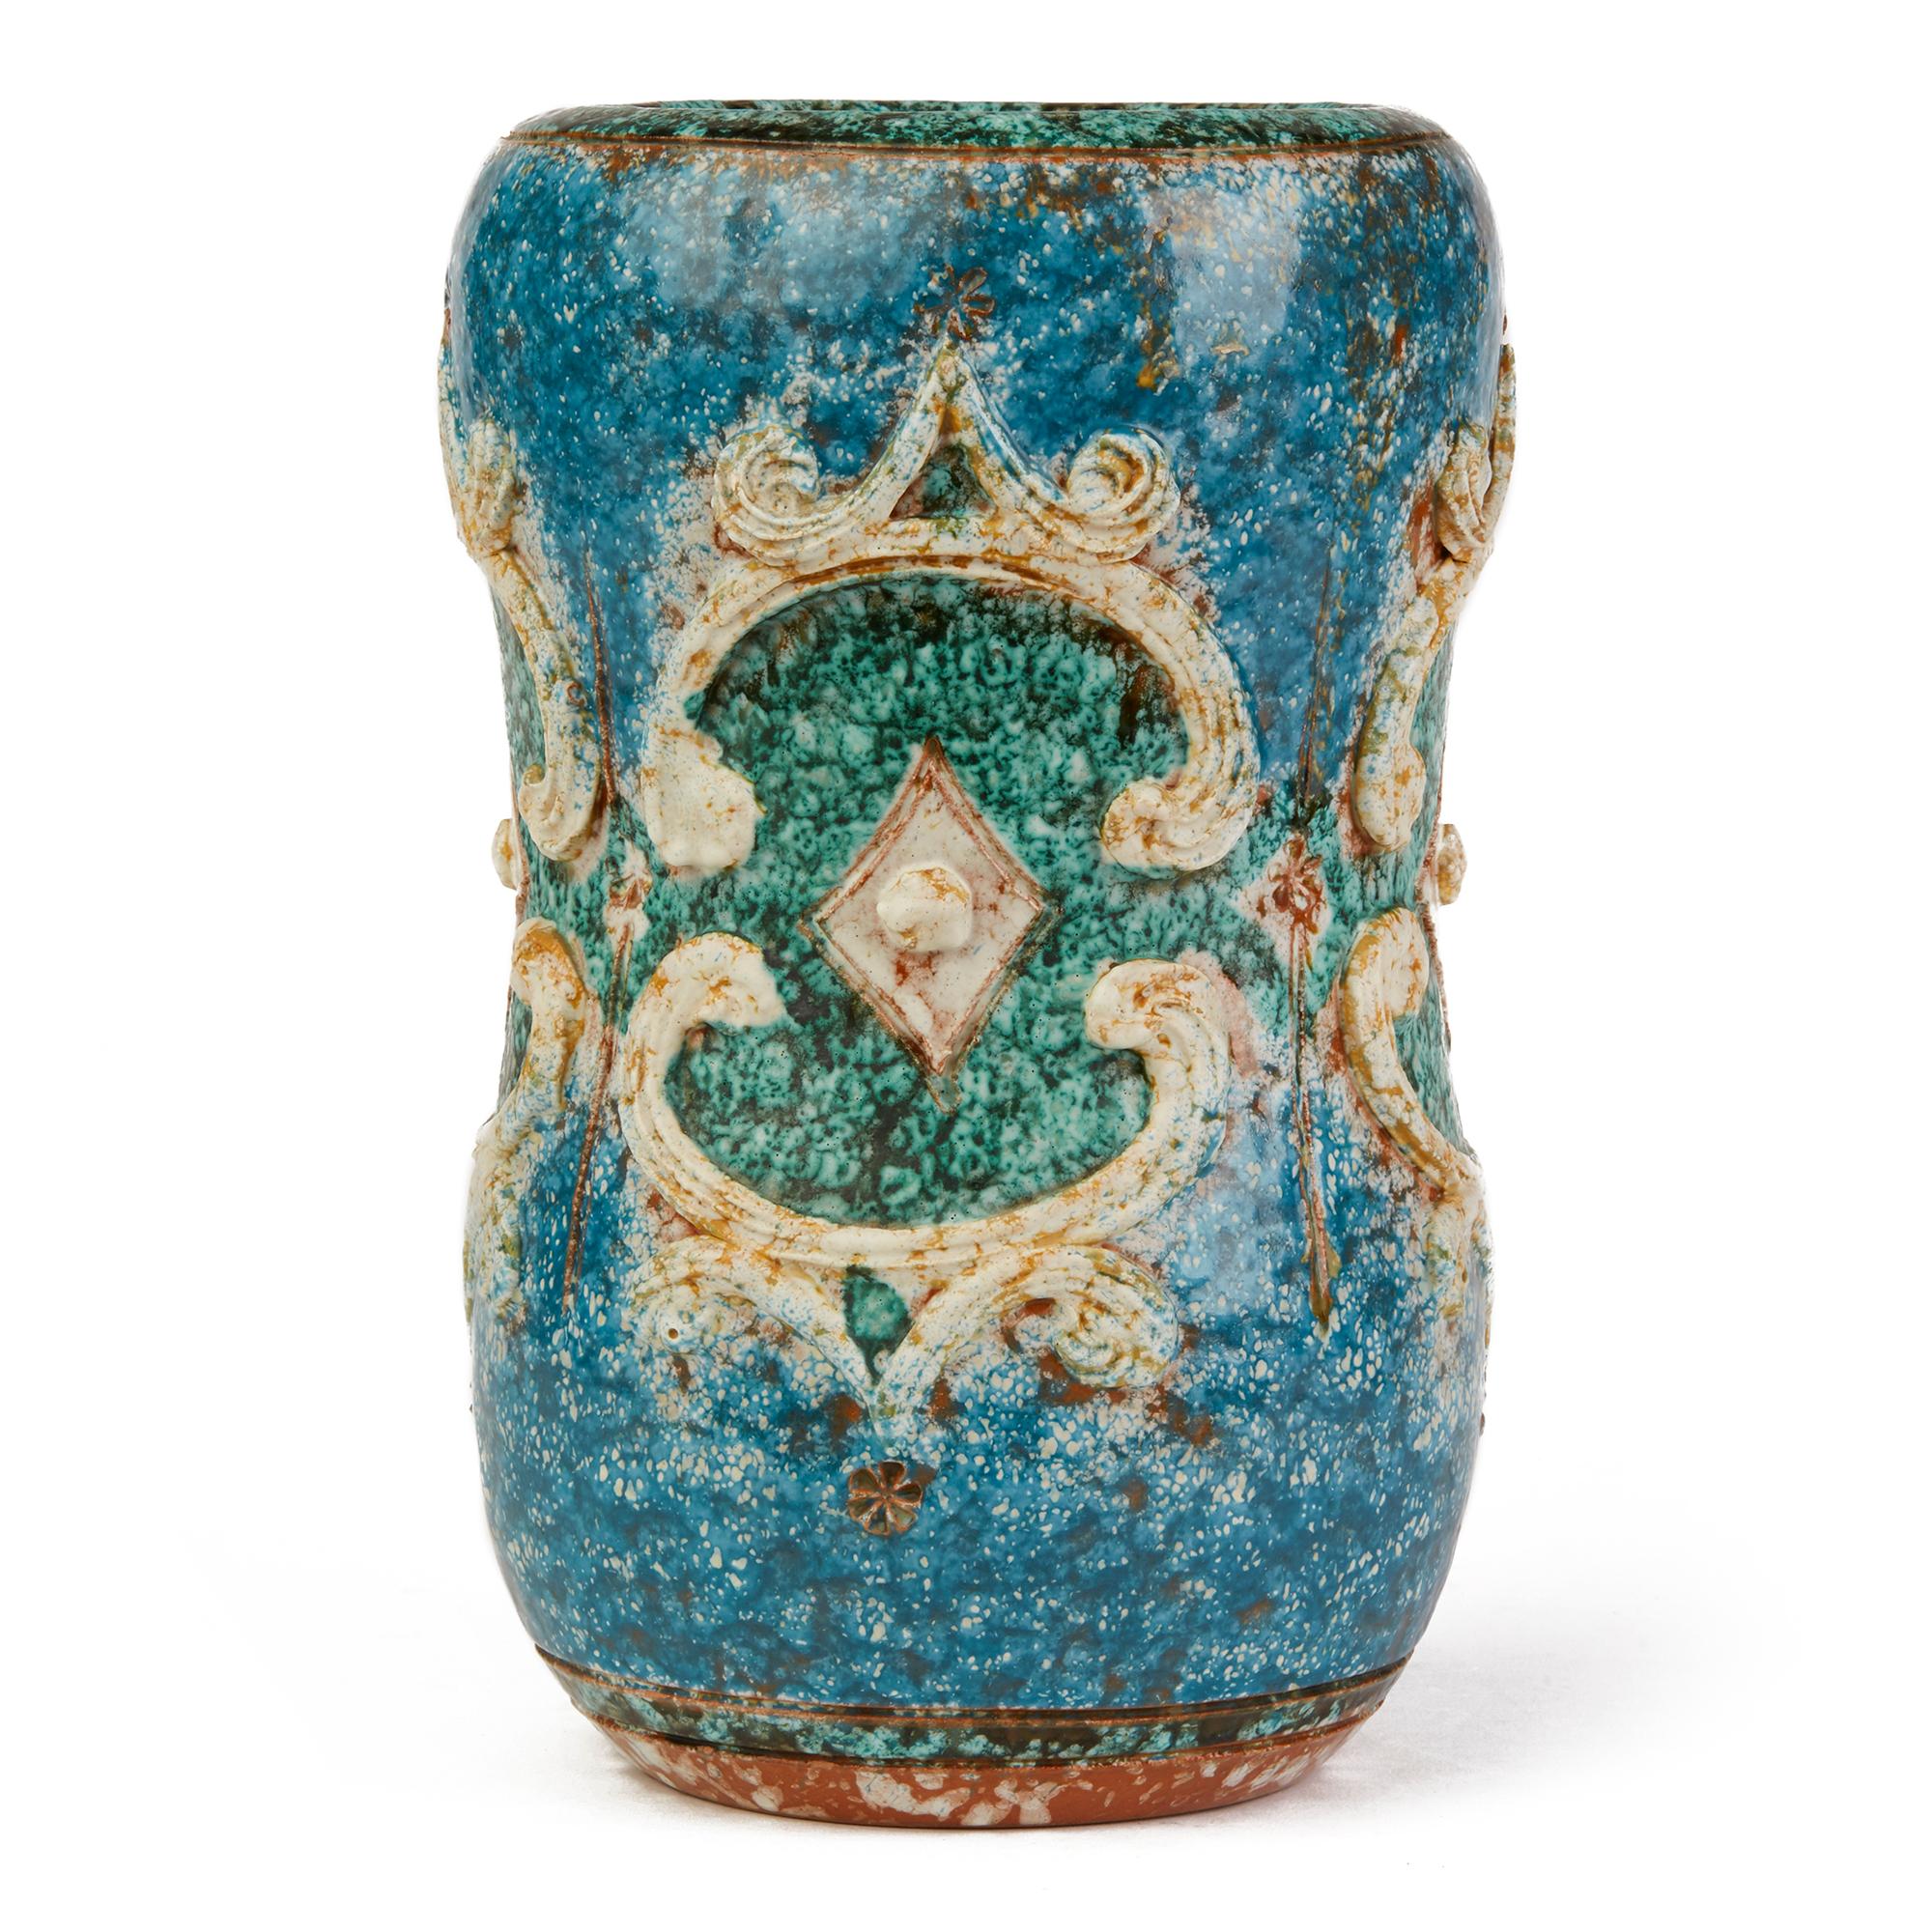 Glazed Alvino Bagni Raymor Attributed Unusual Midcentury Italian Art Pottery Vase For Sale